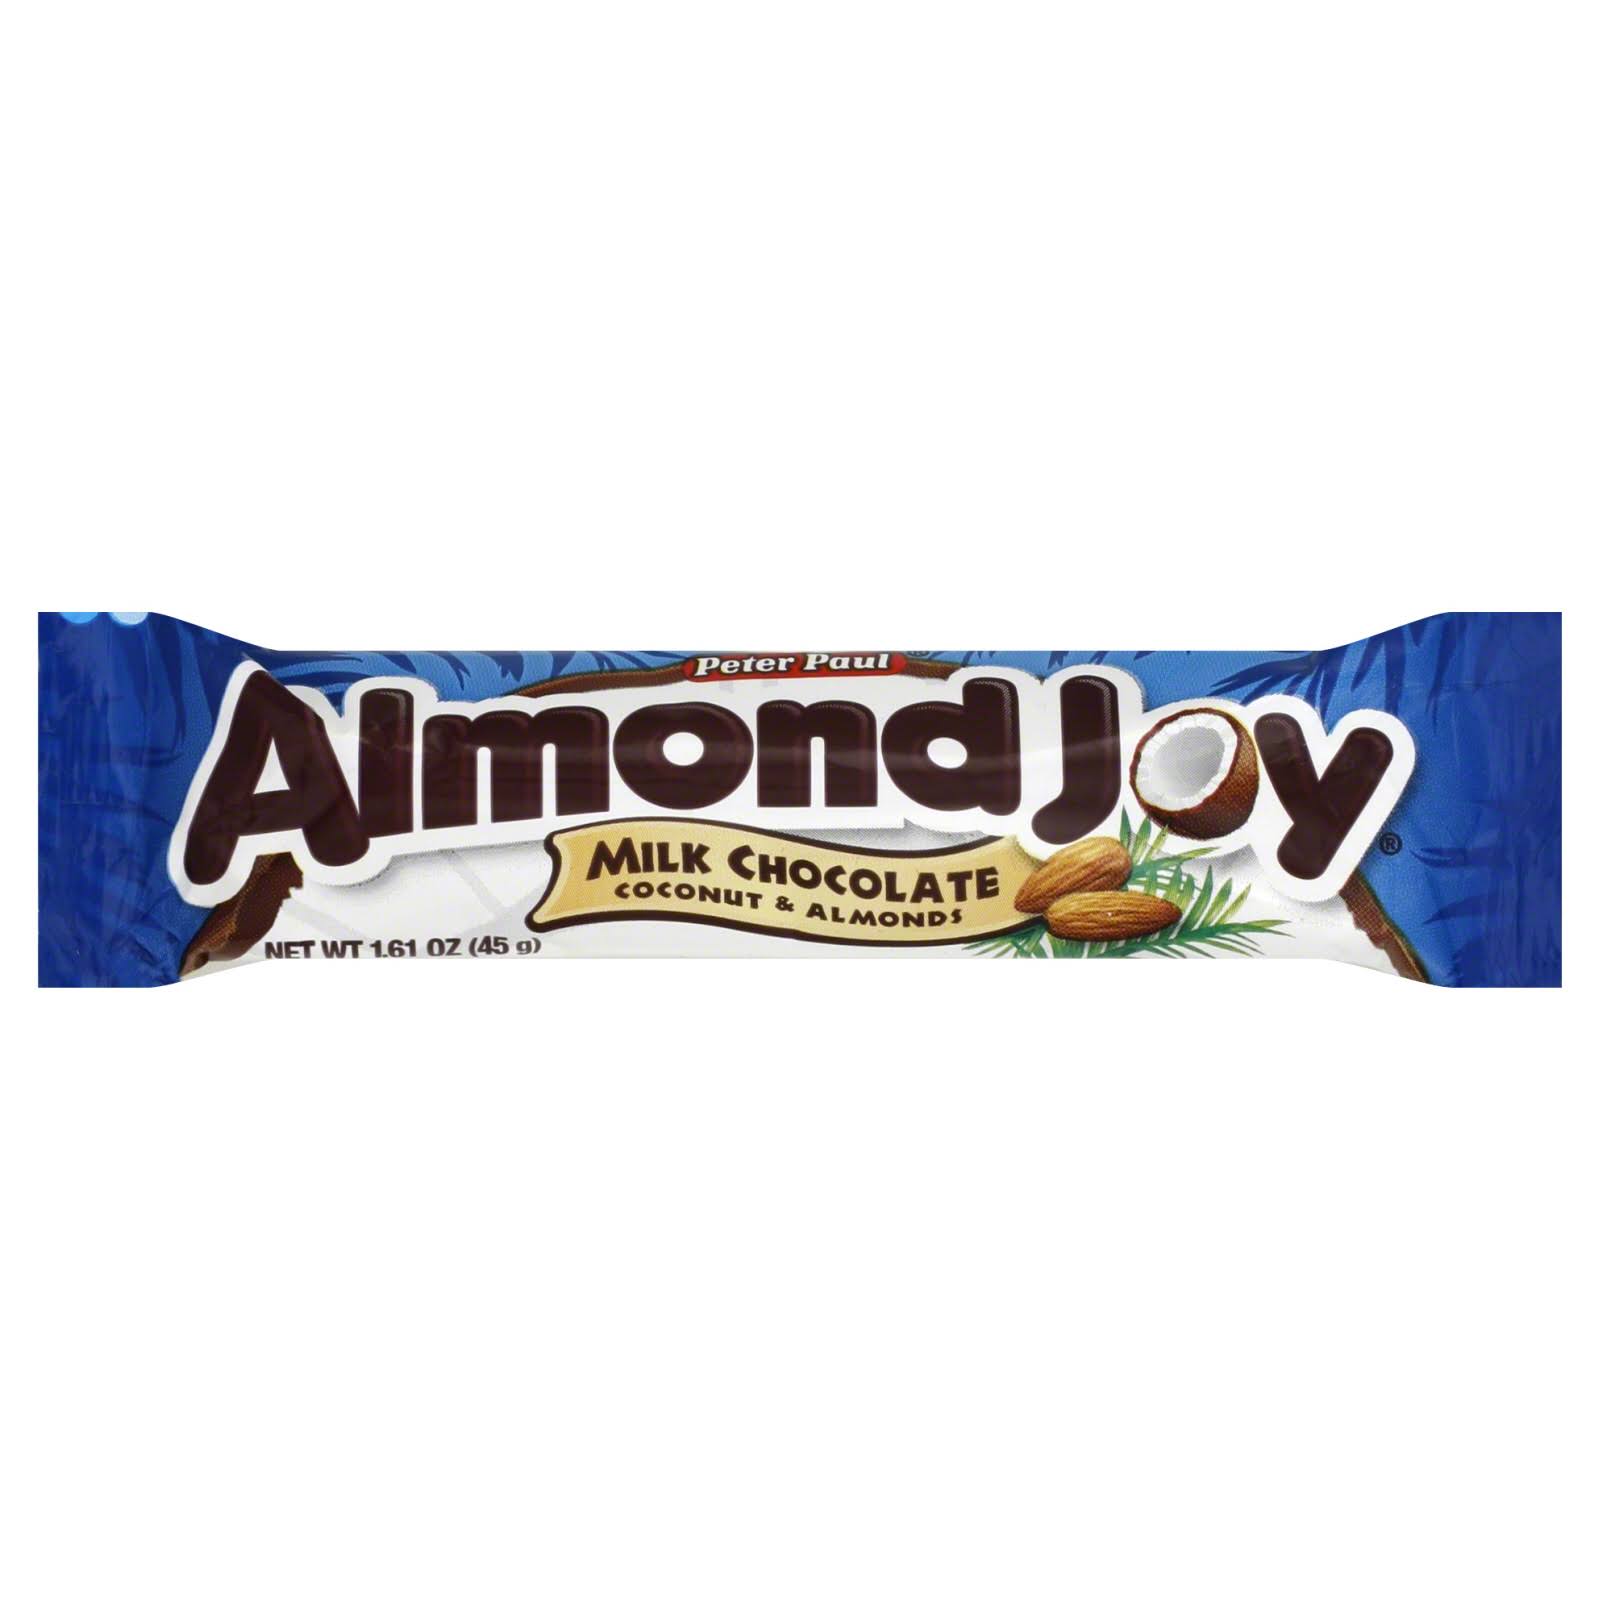 Peter Paul Almond Joy Milk Chocolate - Coconut and Almond, 45g